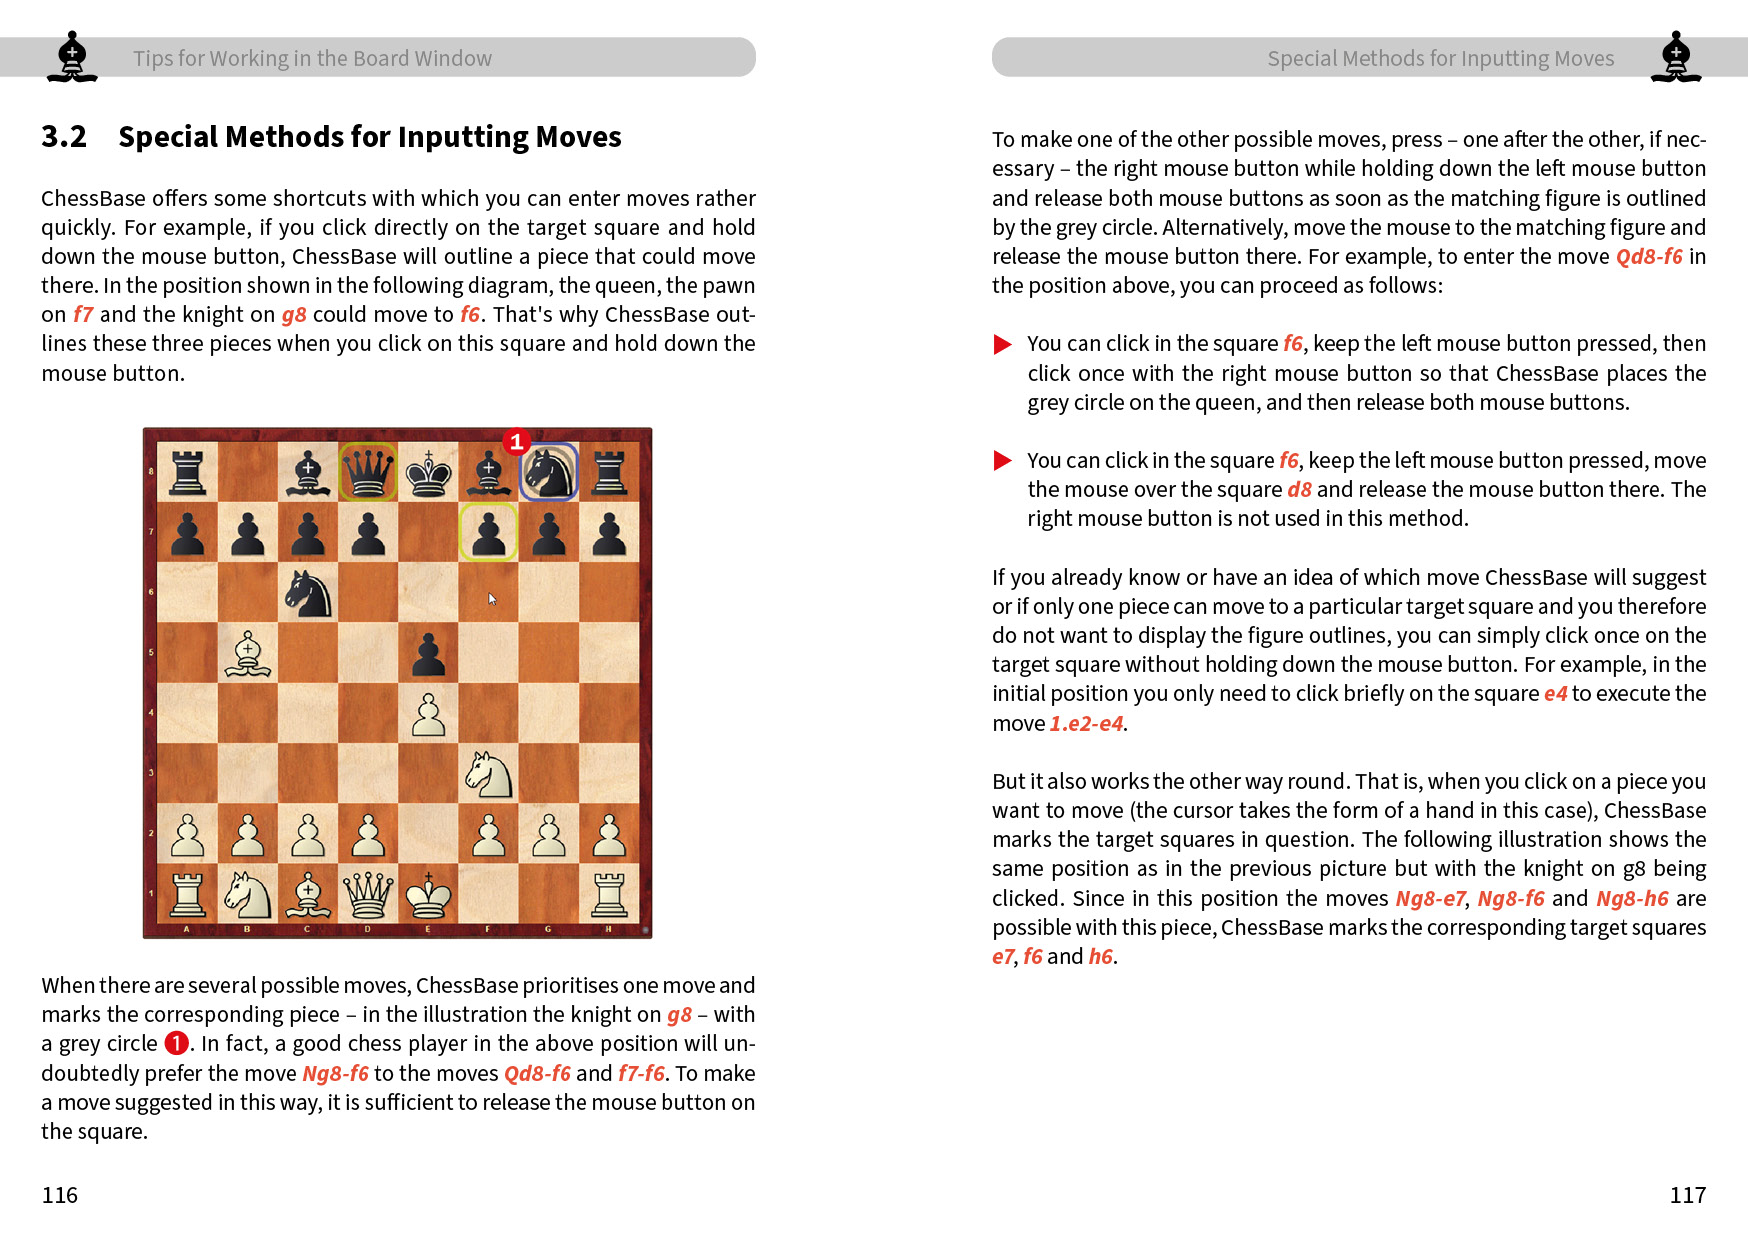 Tutorial - Chessbase Training Functionality 